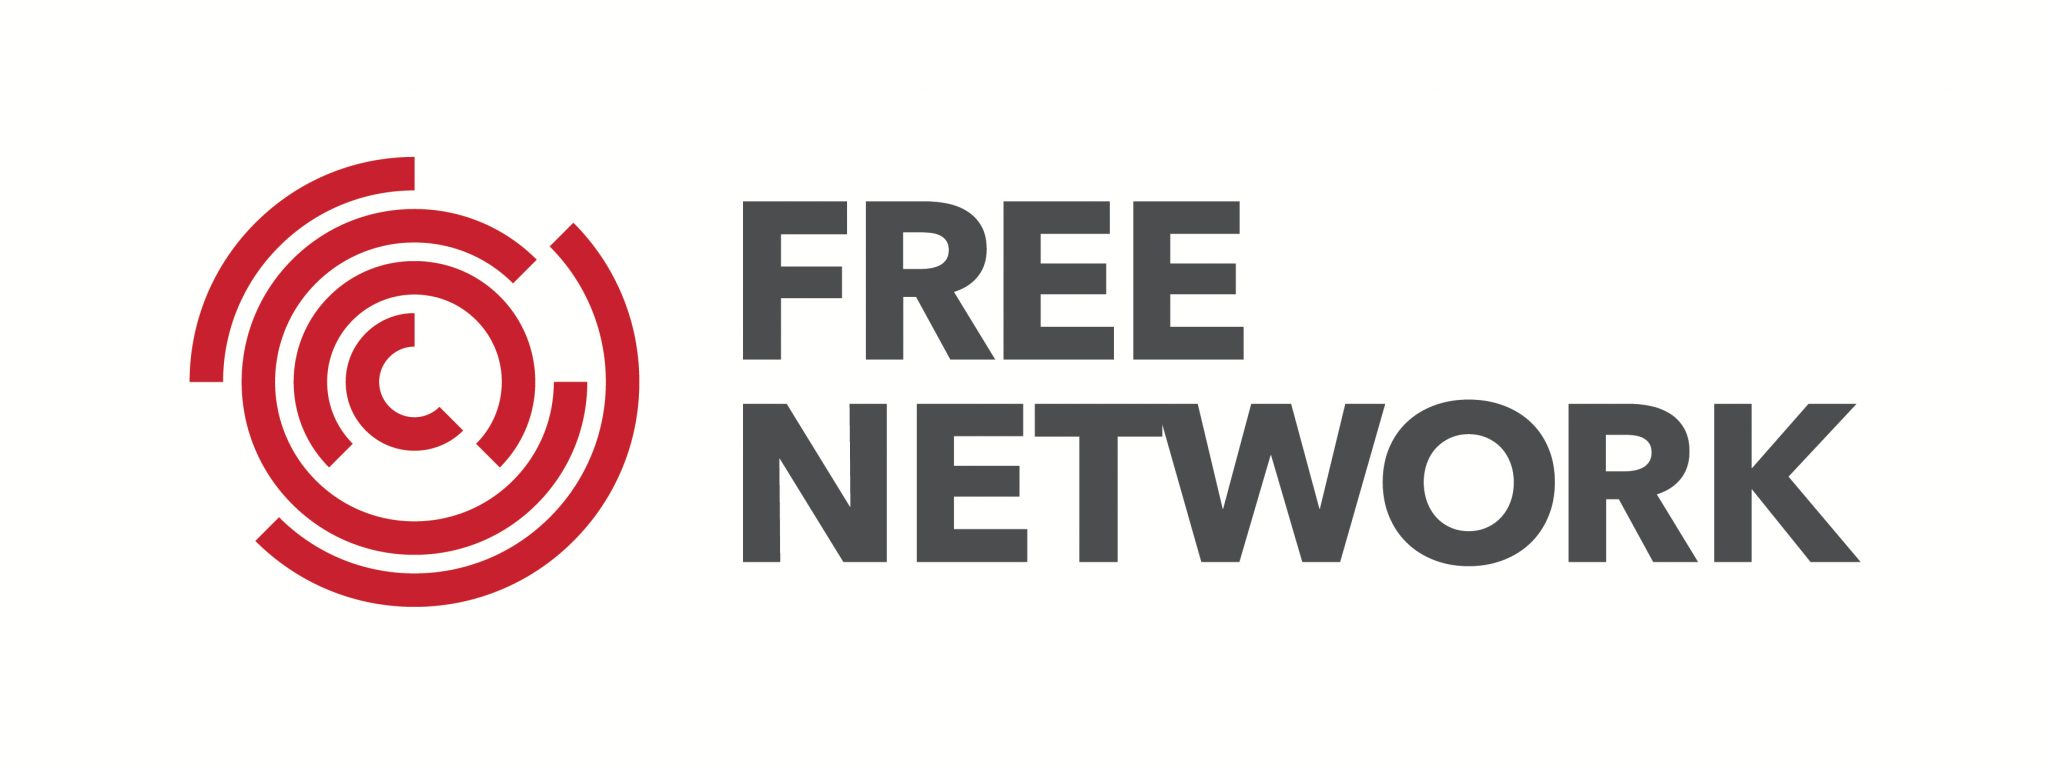 FREE Network logo